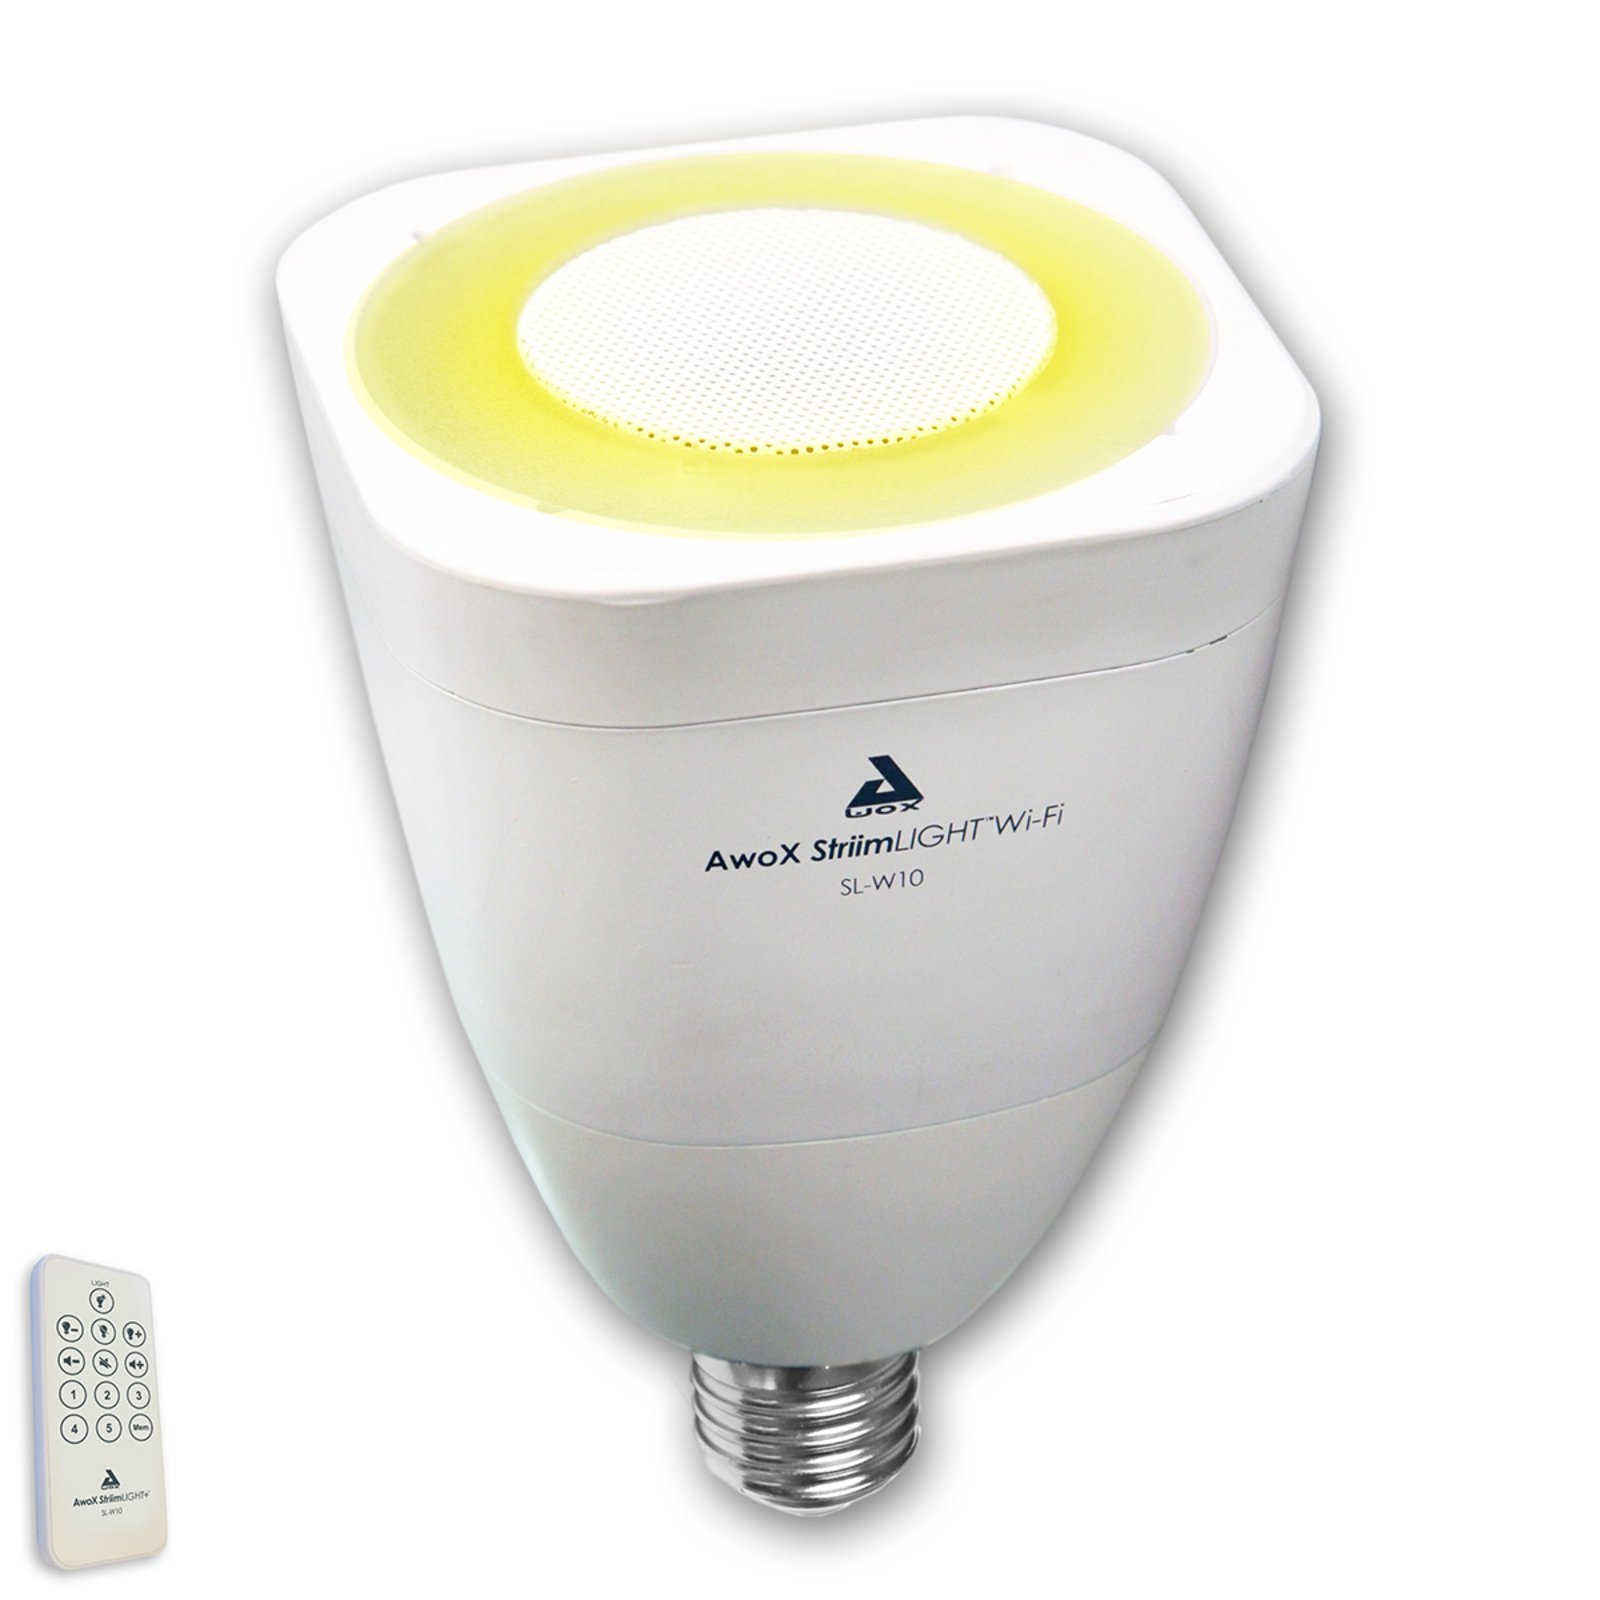 AwoX StriimLIGHT WiFi-White LED-Lampe E27, 7 W